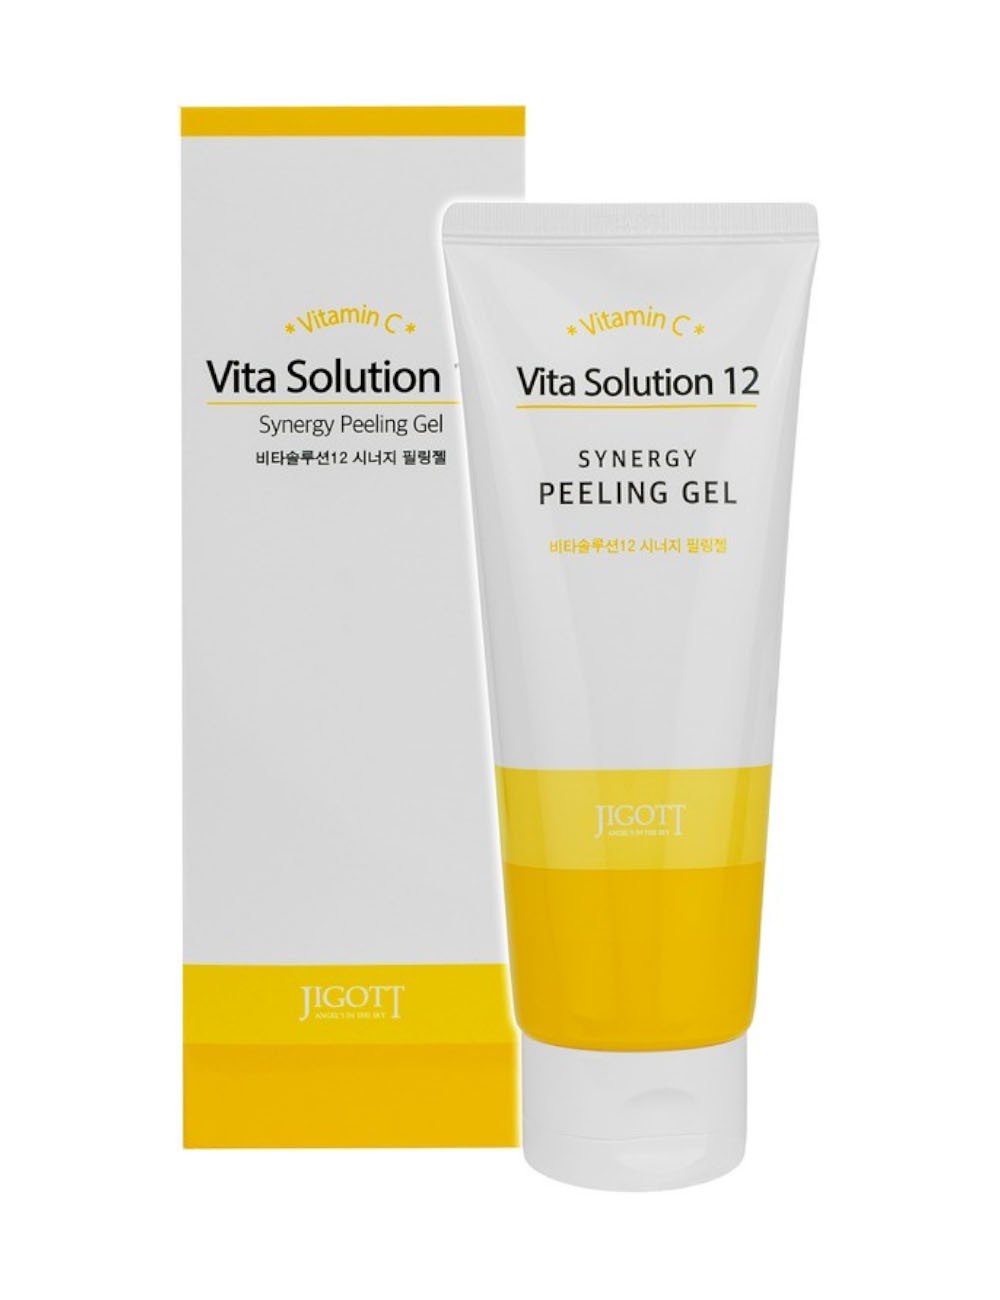 JIGOTT Vitamin C Vita Solution 12 Synergy Peeling Gel